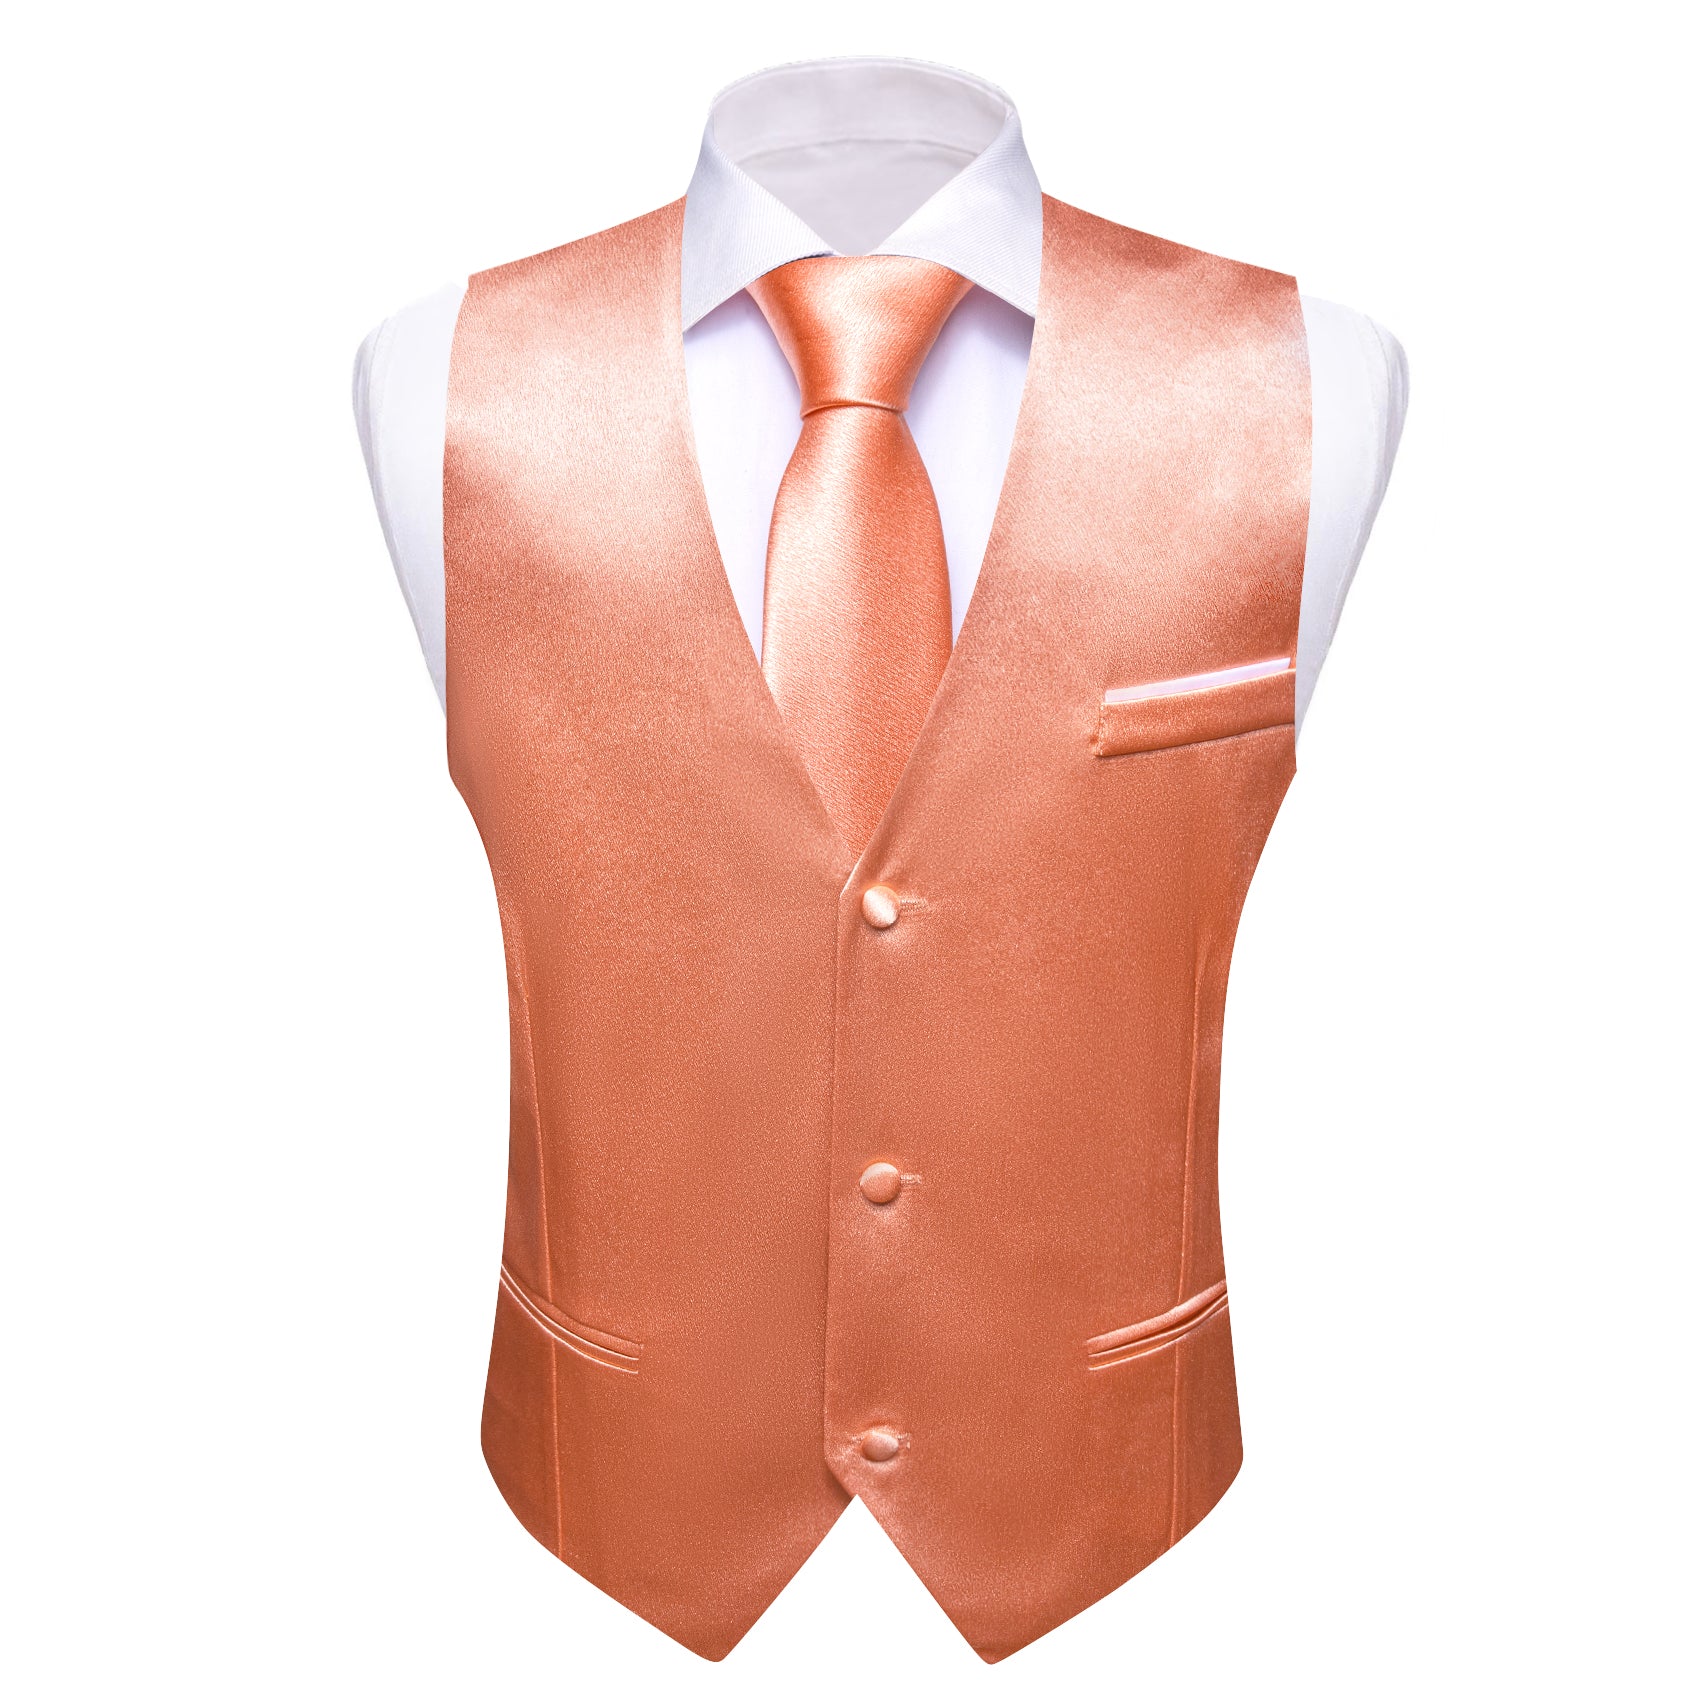 Barry.wang Coral Solid Business Vest Suit